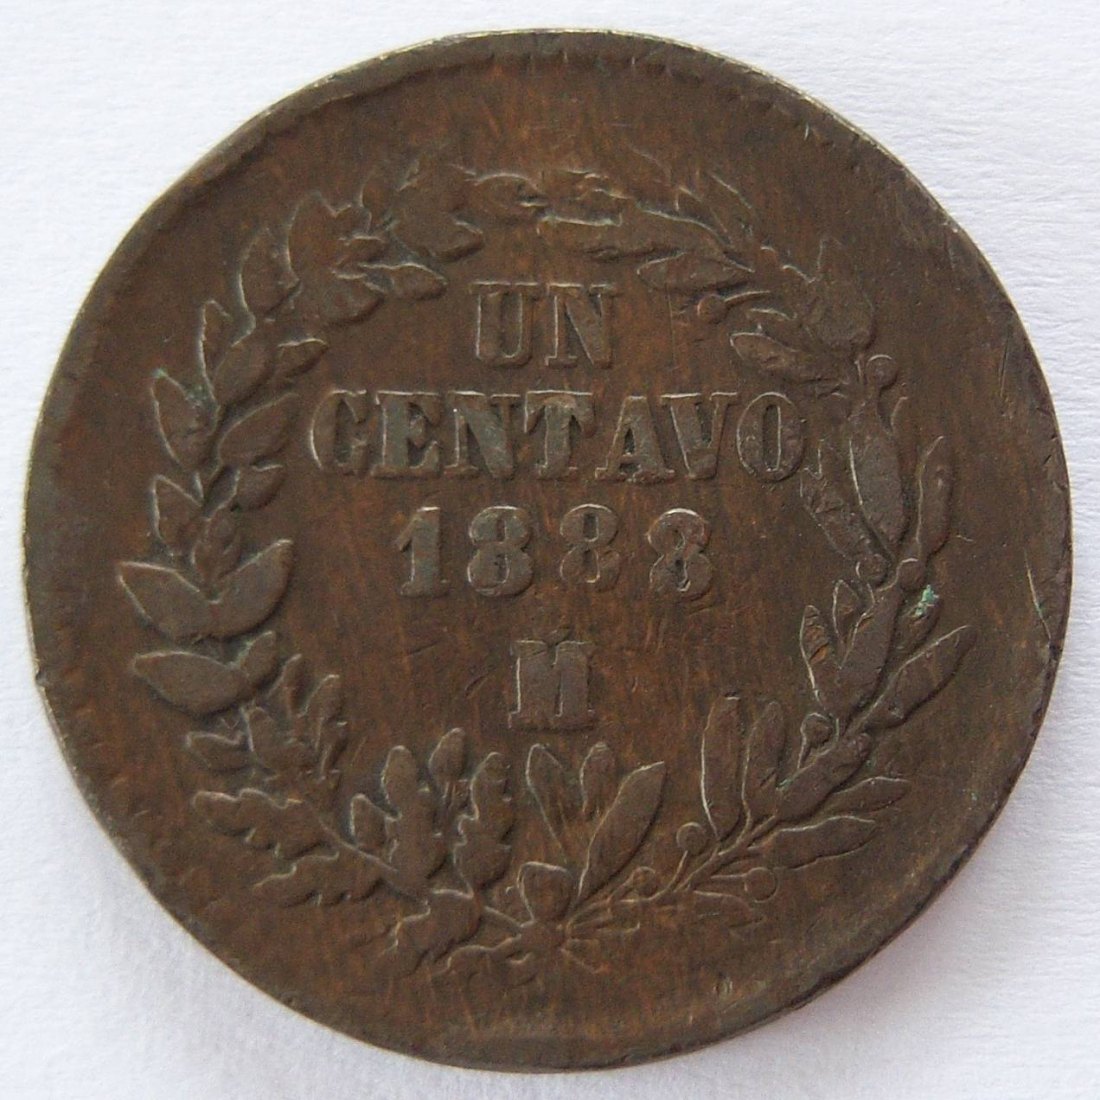  Mexico 1 Centavo 1888   